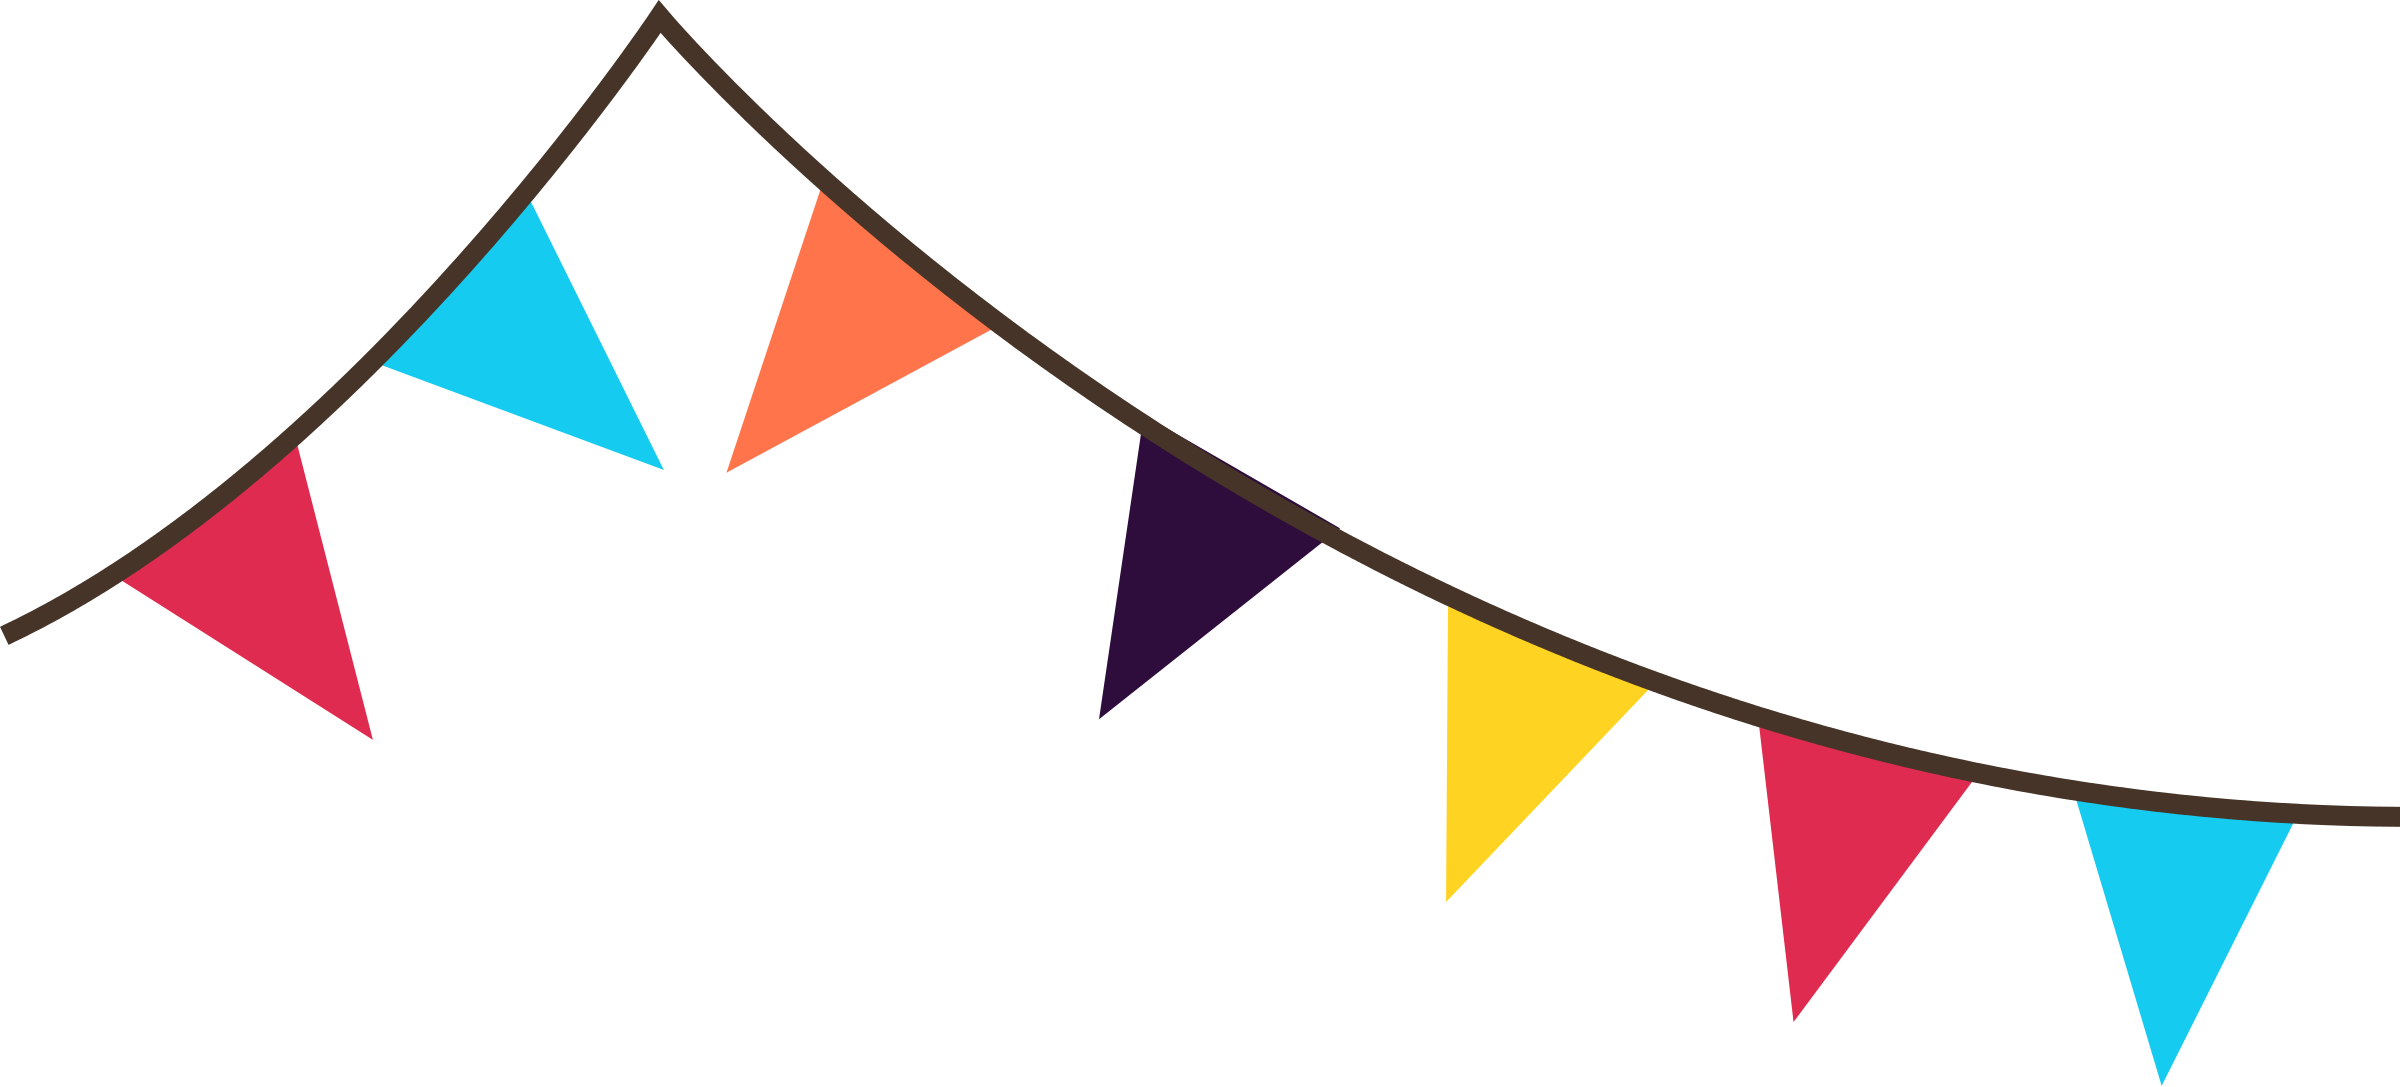 Rainbow flag banner clipart happy birthday - ClipartFox